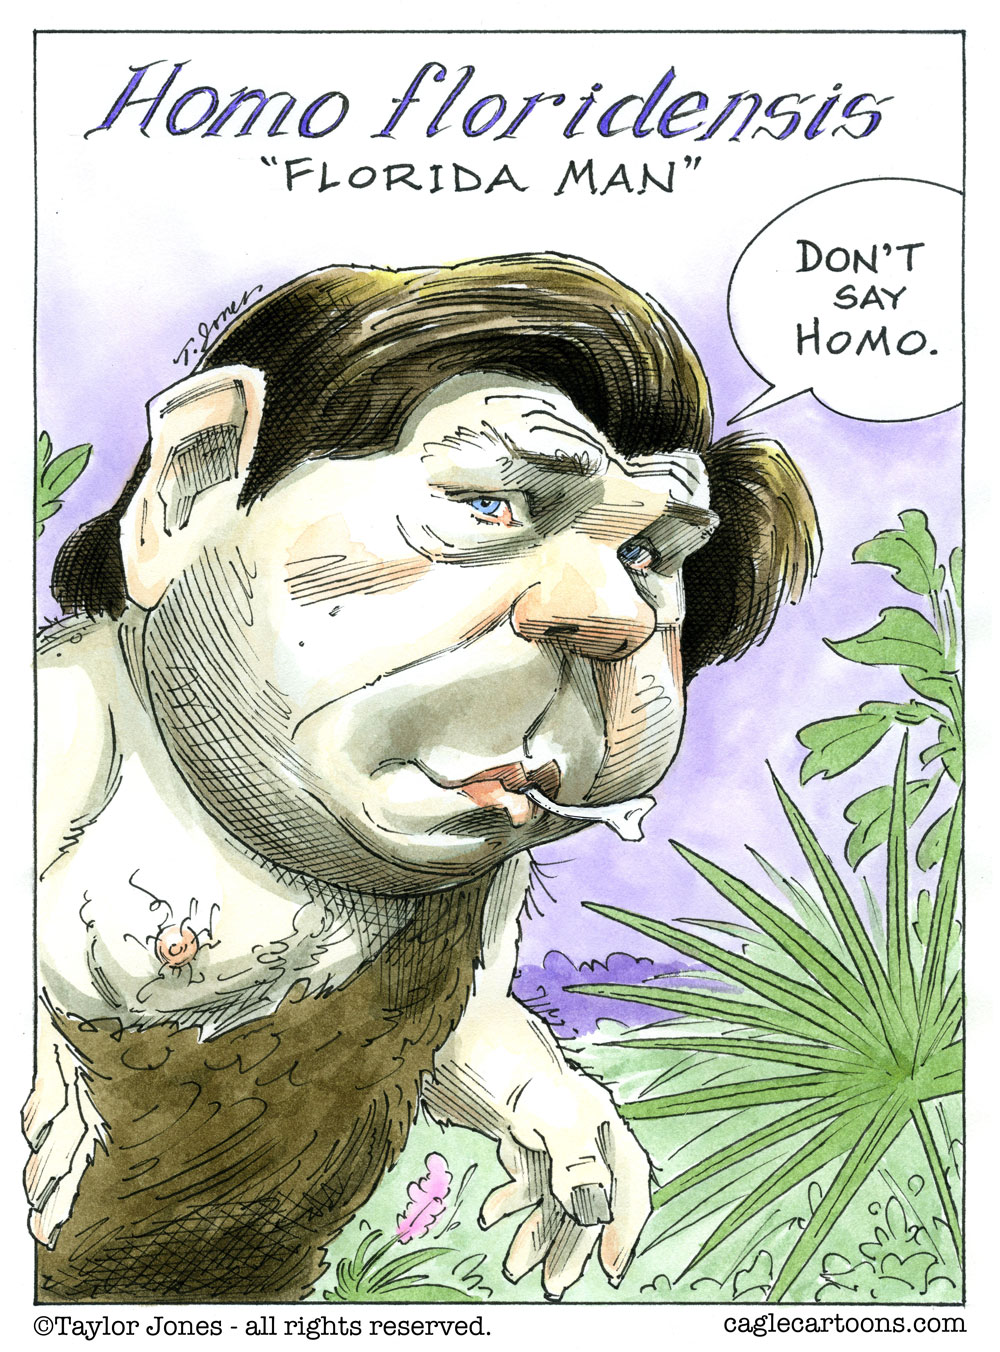 Ron DeSantis by Taylor Jones, Politicalcartoons.com